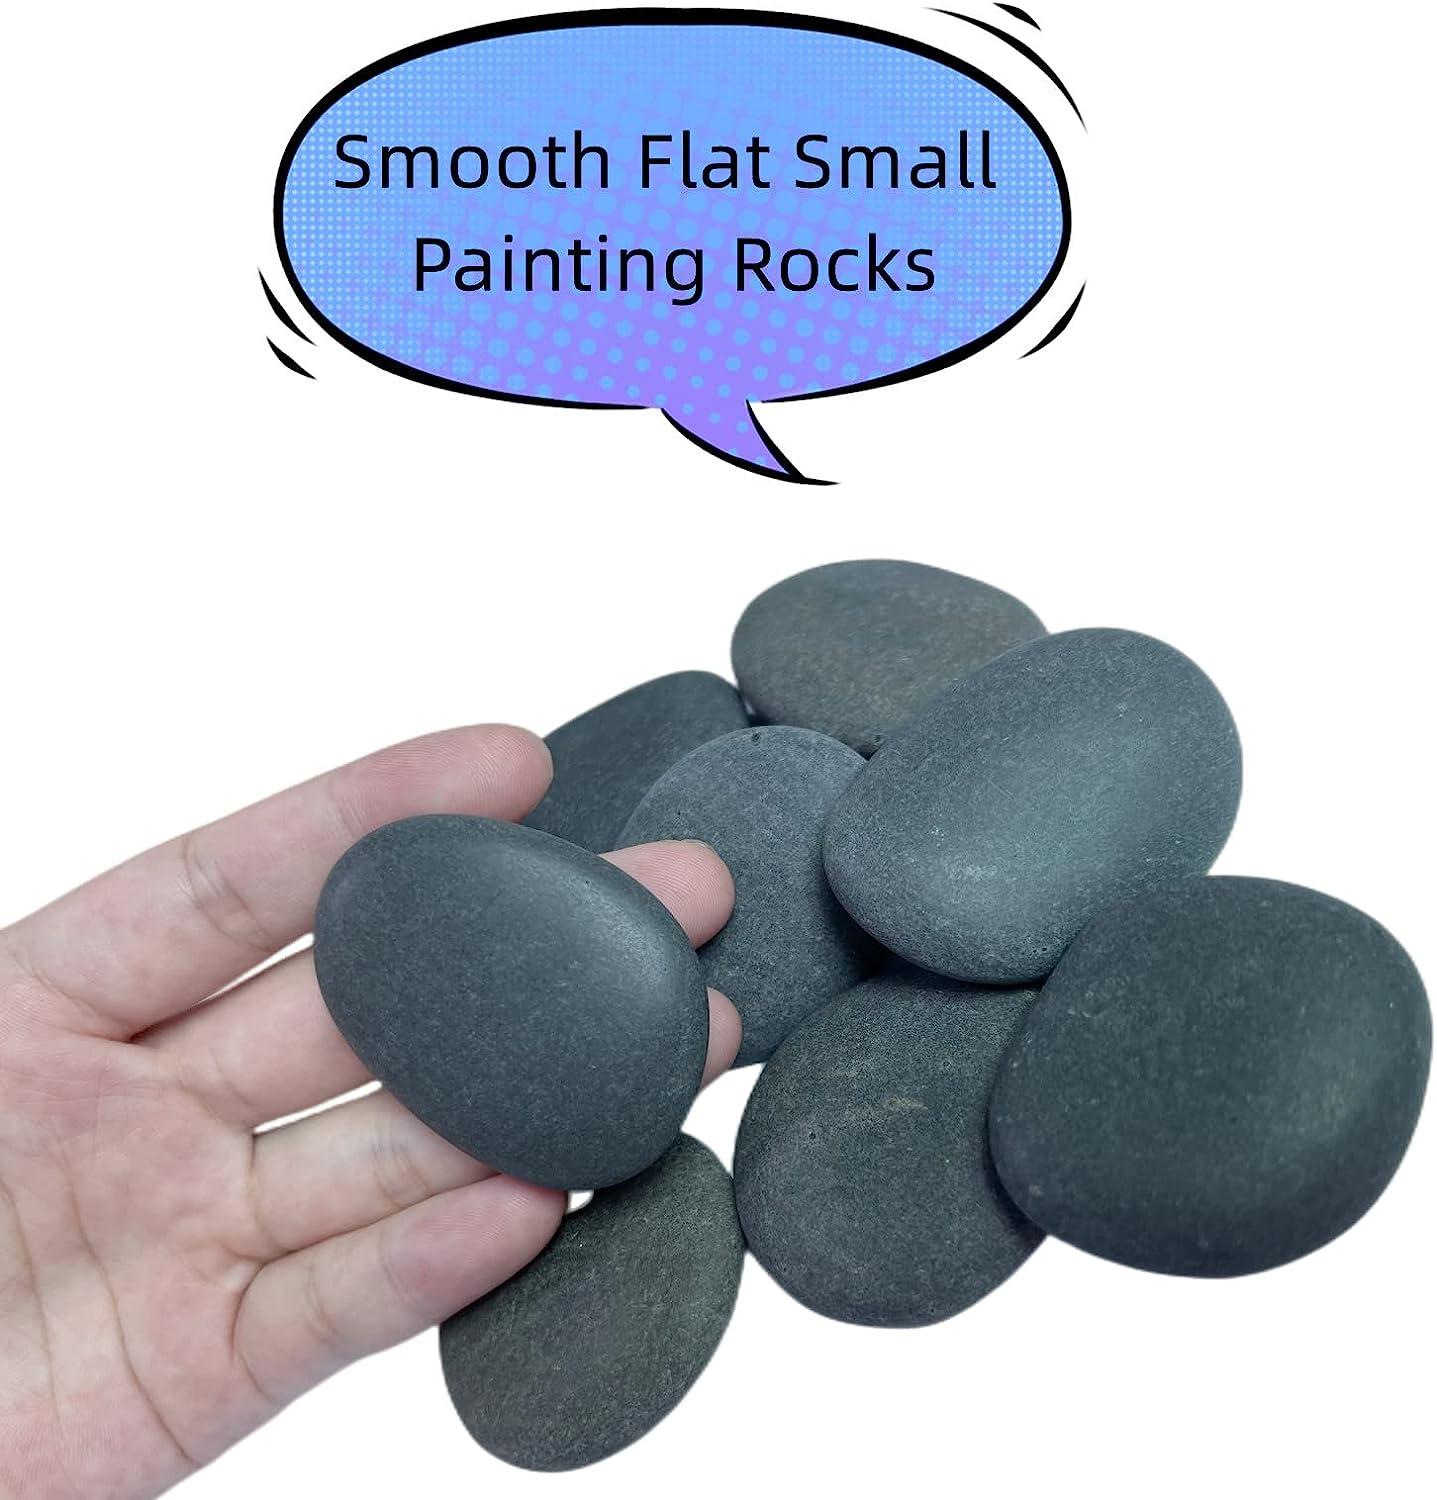 lifetop 120PCS Painting Rocks, DIY Rocks Flat & Smooth Kindness Rocks for  Arts, Crafts, Decoration, Medium/Small/Tiny Rocks for Painting,Hand Picked